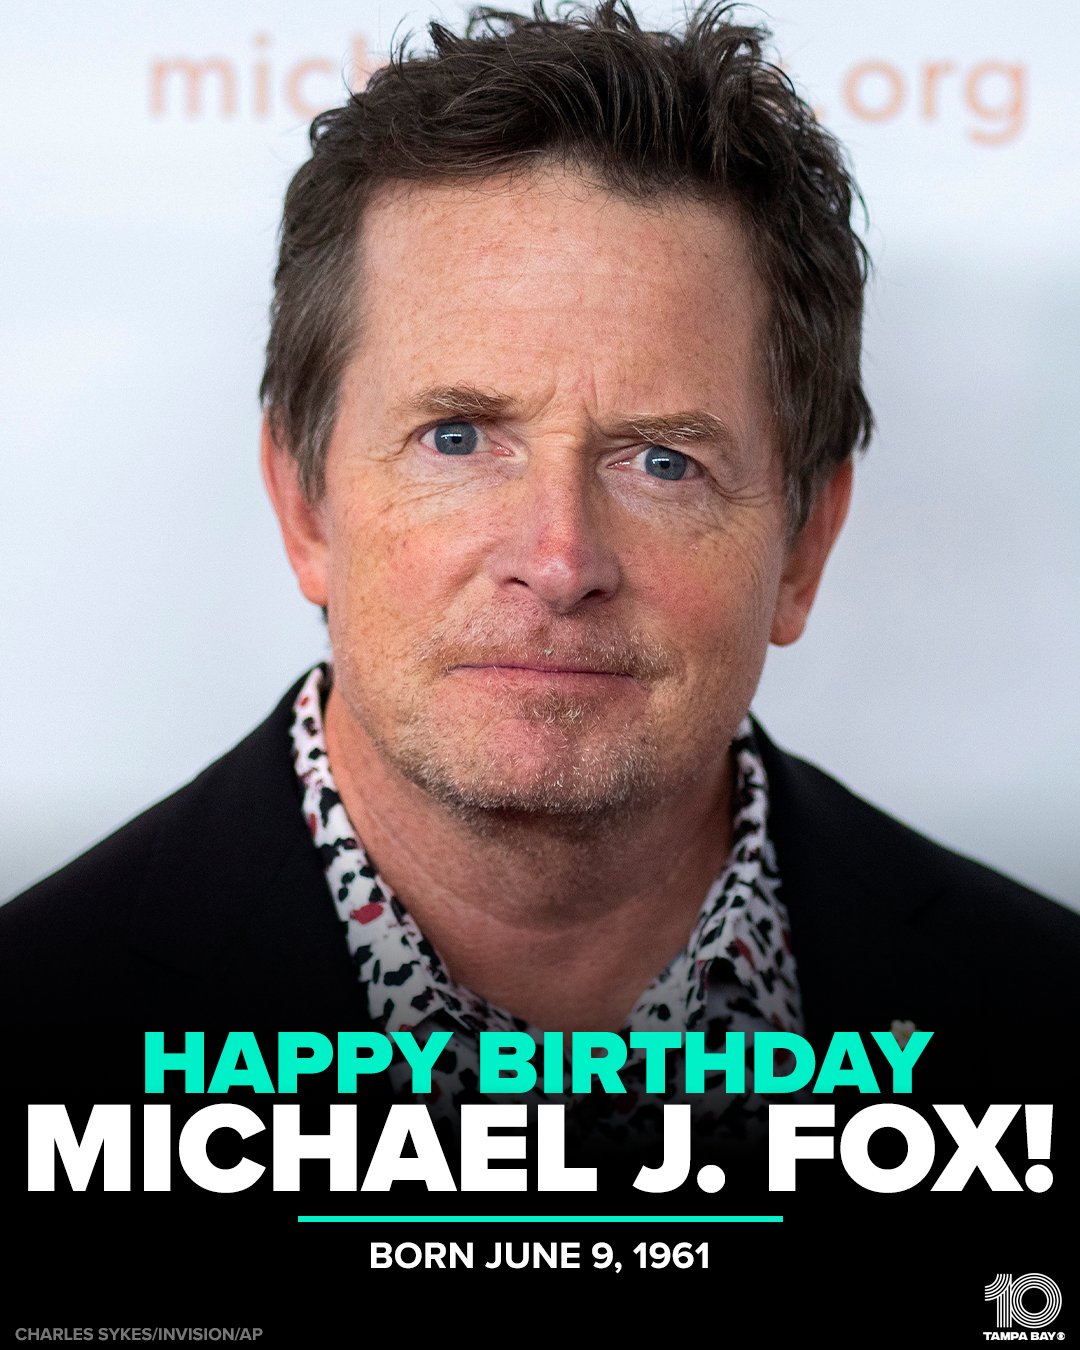 HAPPY BIRTHDAY! Actor Michael J. Fox is turning 61 today! 